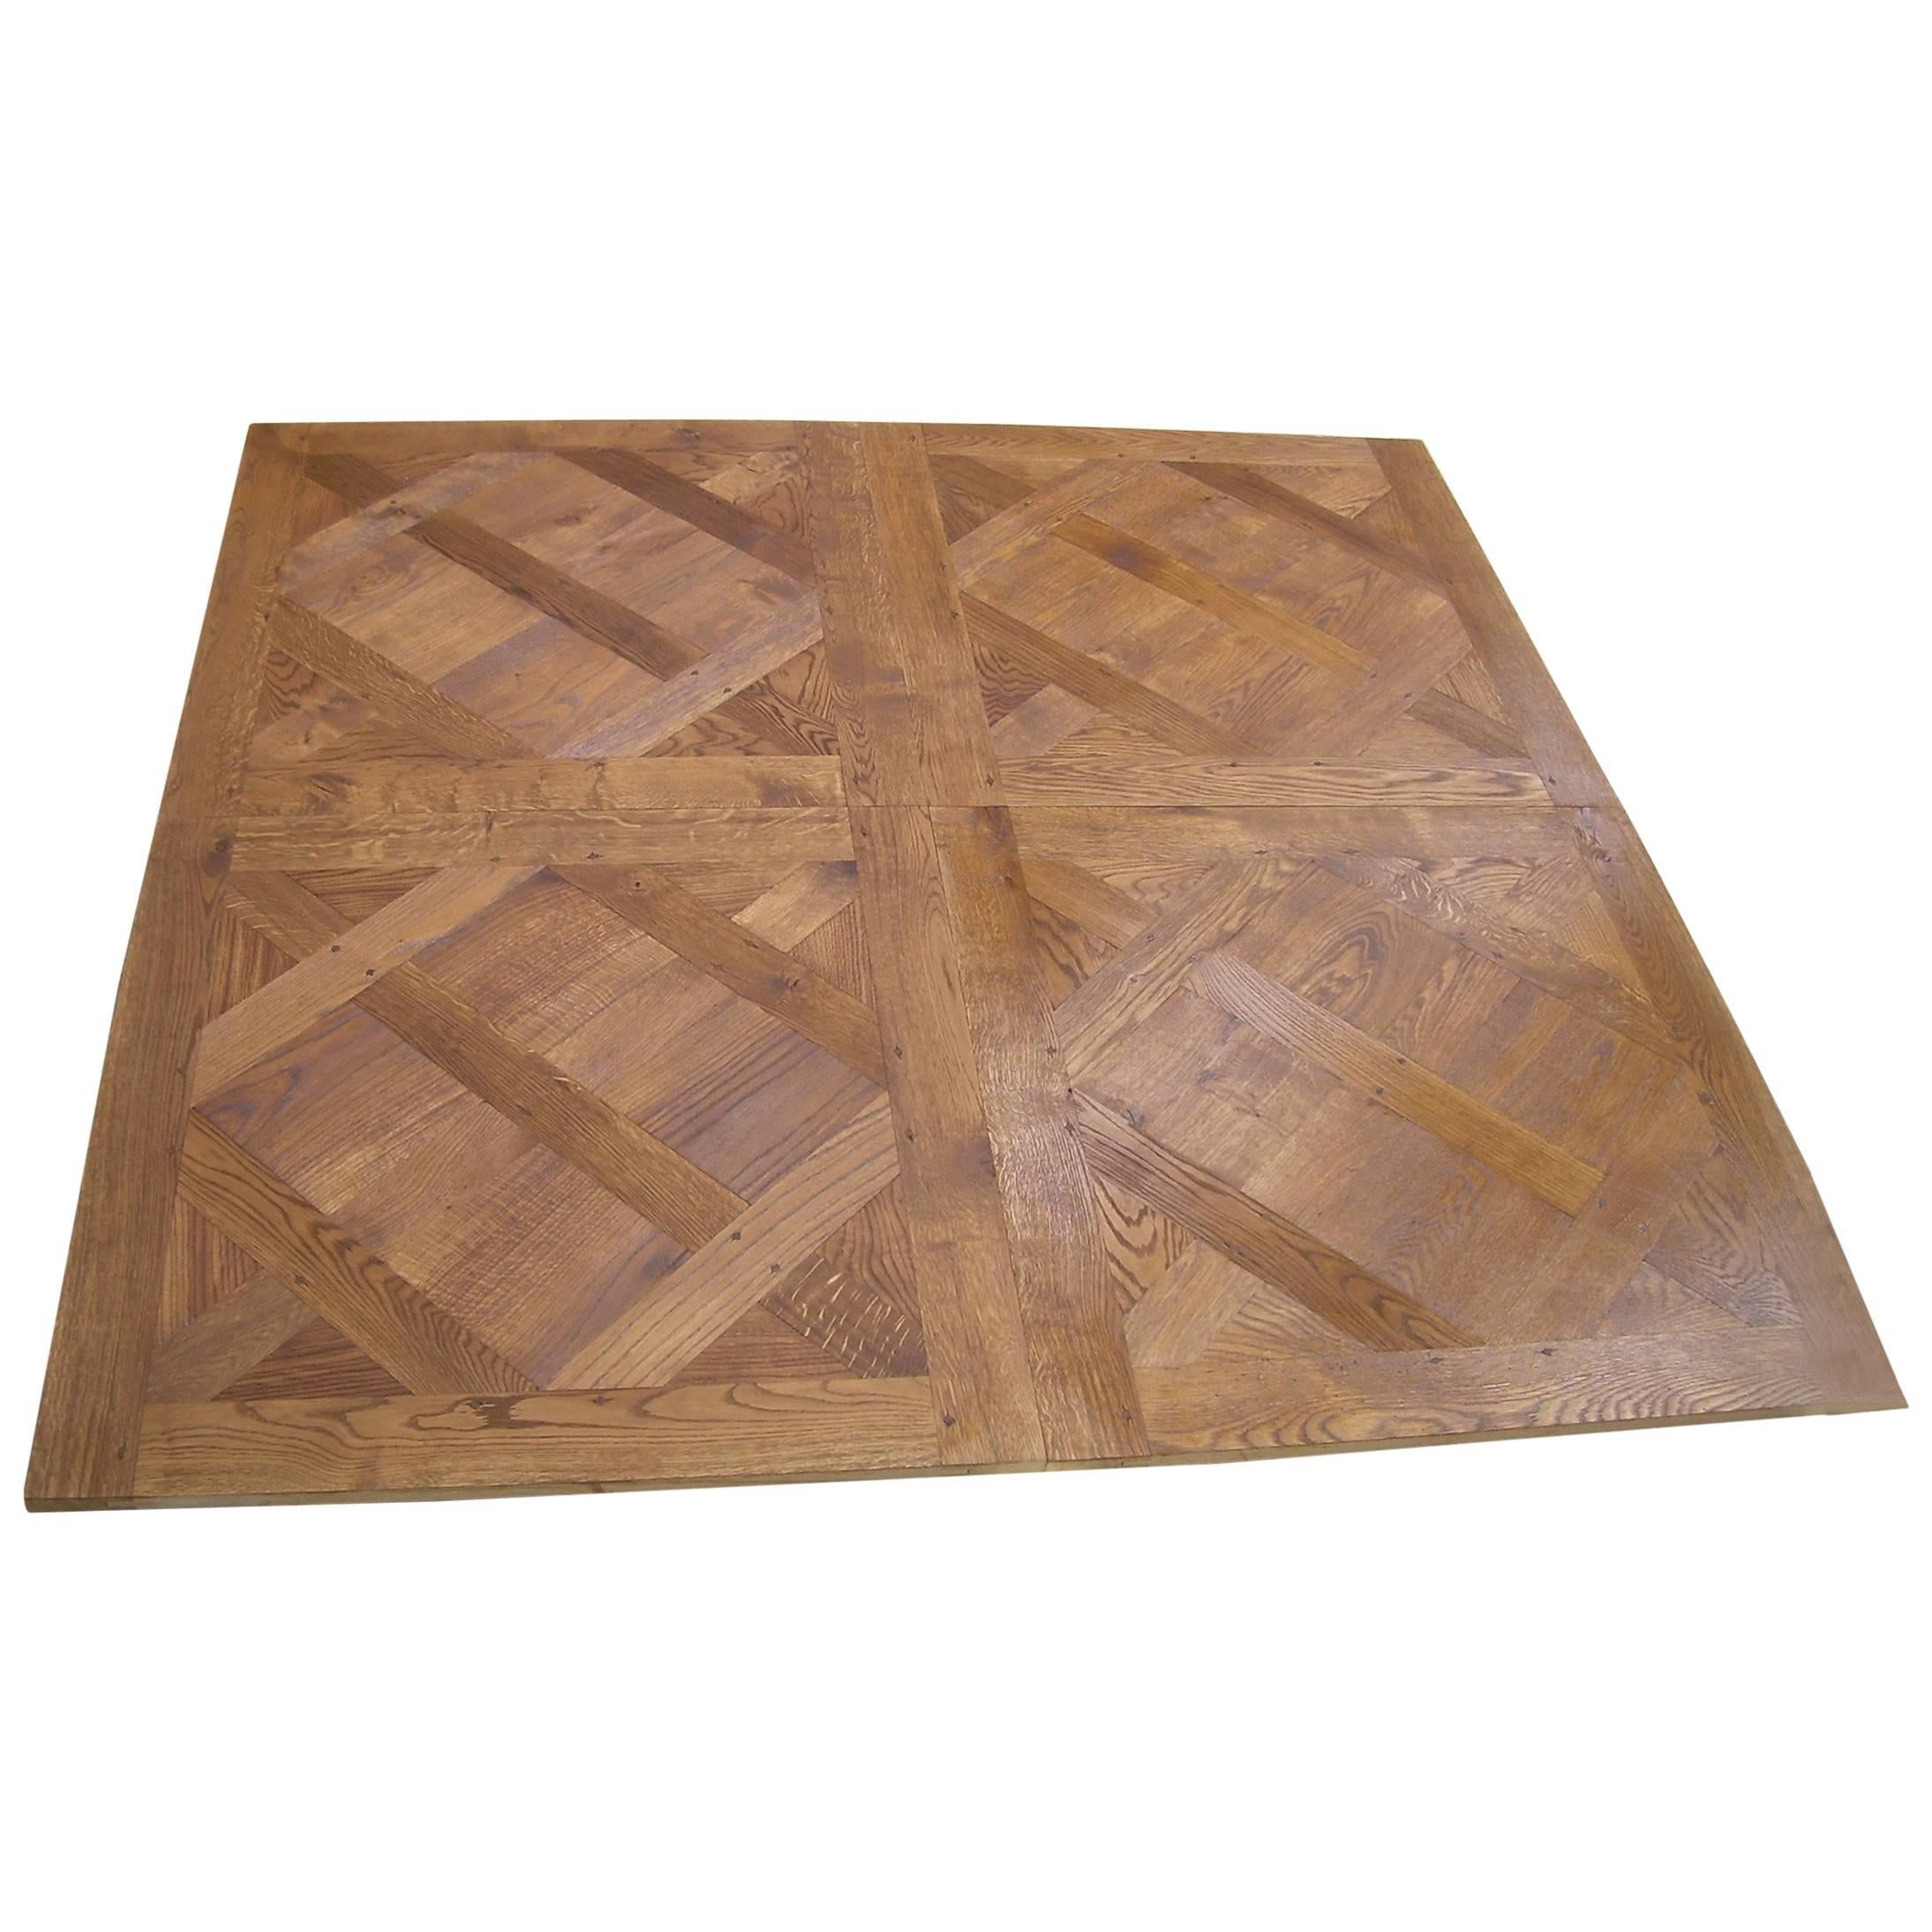 French Solid Wood Oak Flooring "Parquet de France" Handmade, France 21st Century For Sale